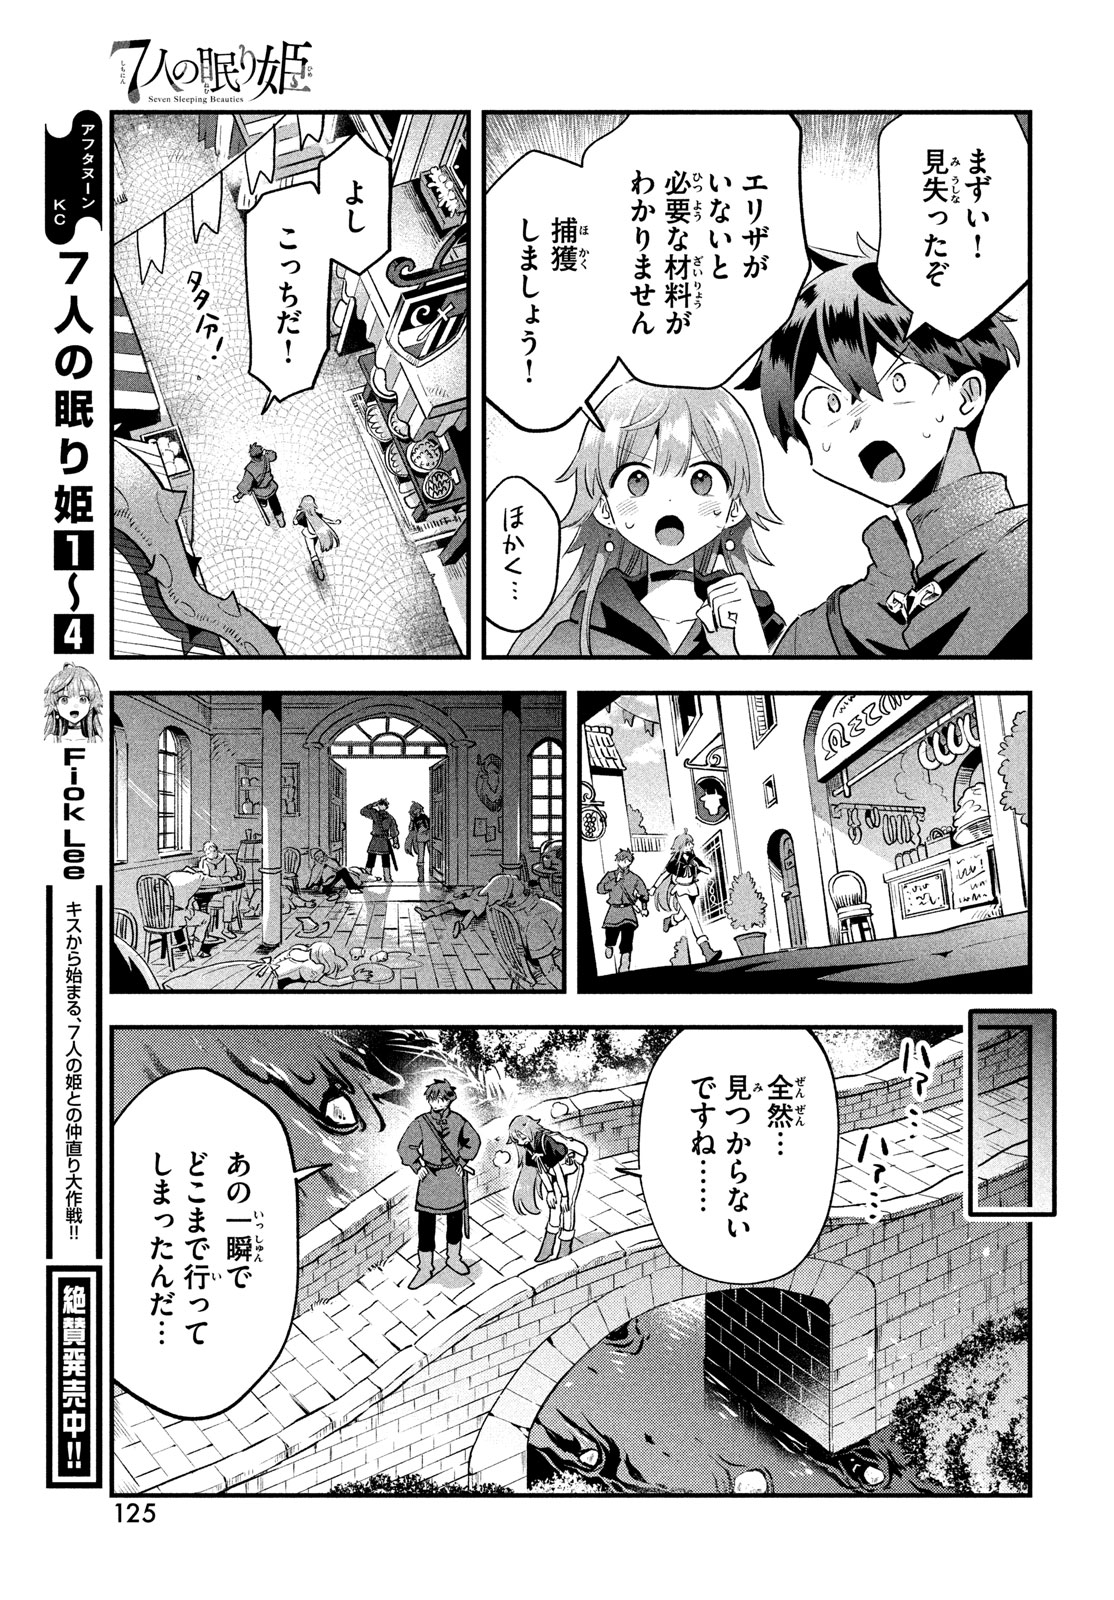 7-nin no Nemuri Hime - Chapter 41 - Page 5